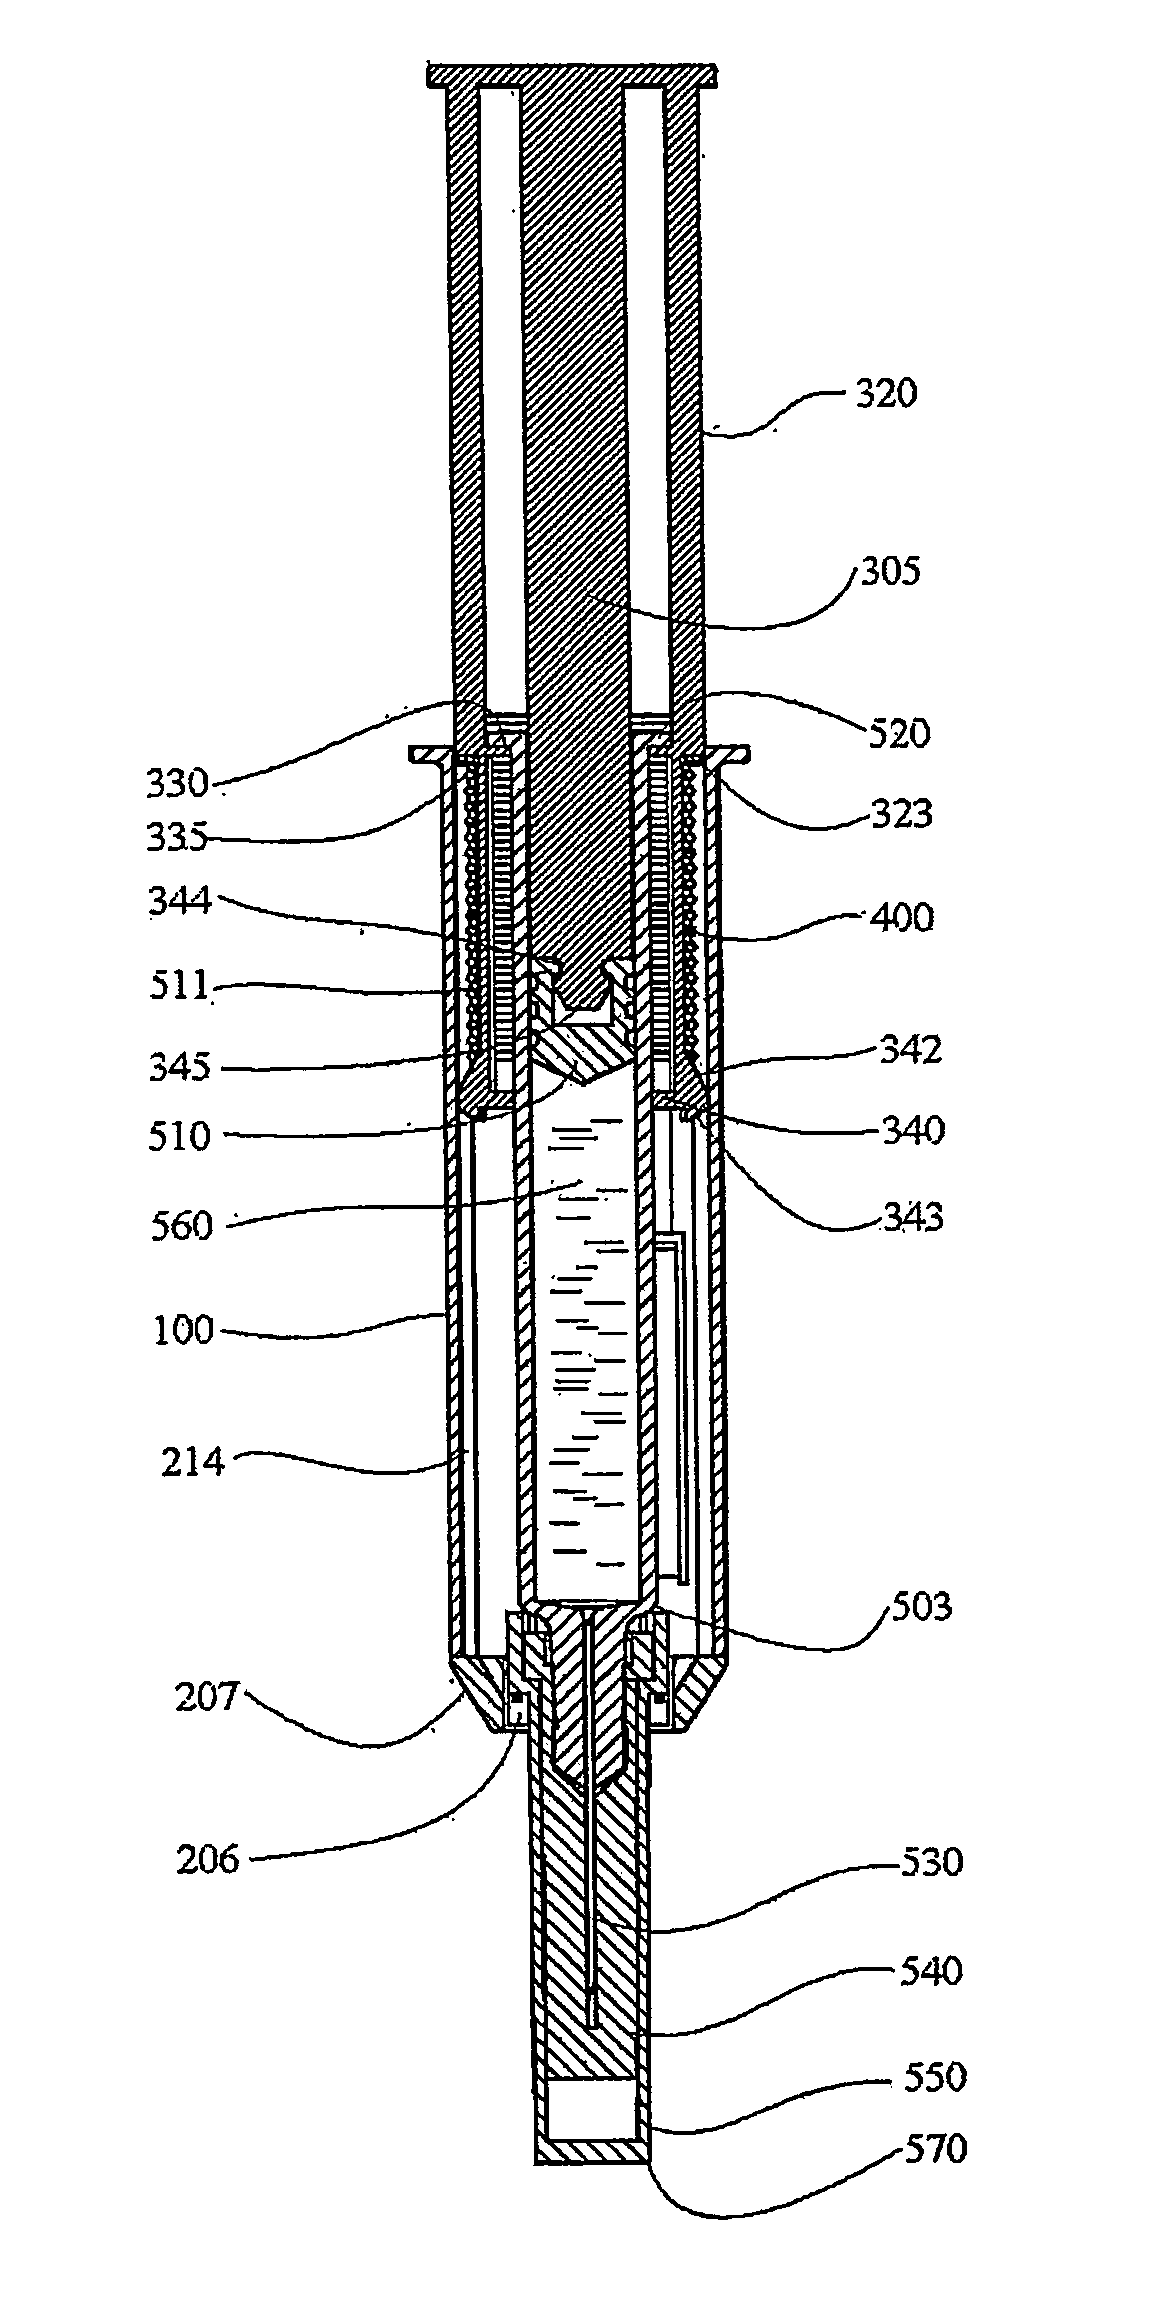 Syringe with automatically triggered safety sleeve